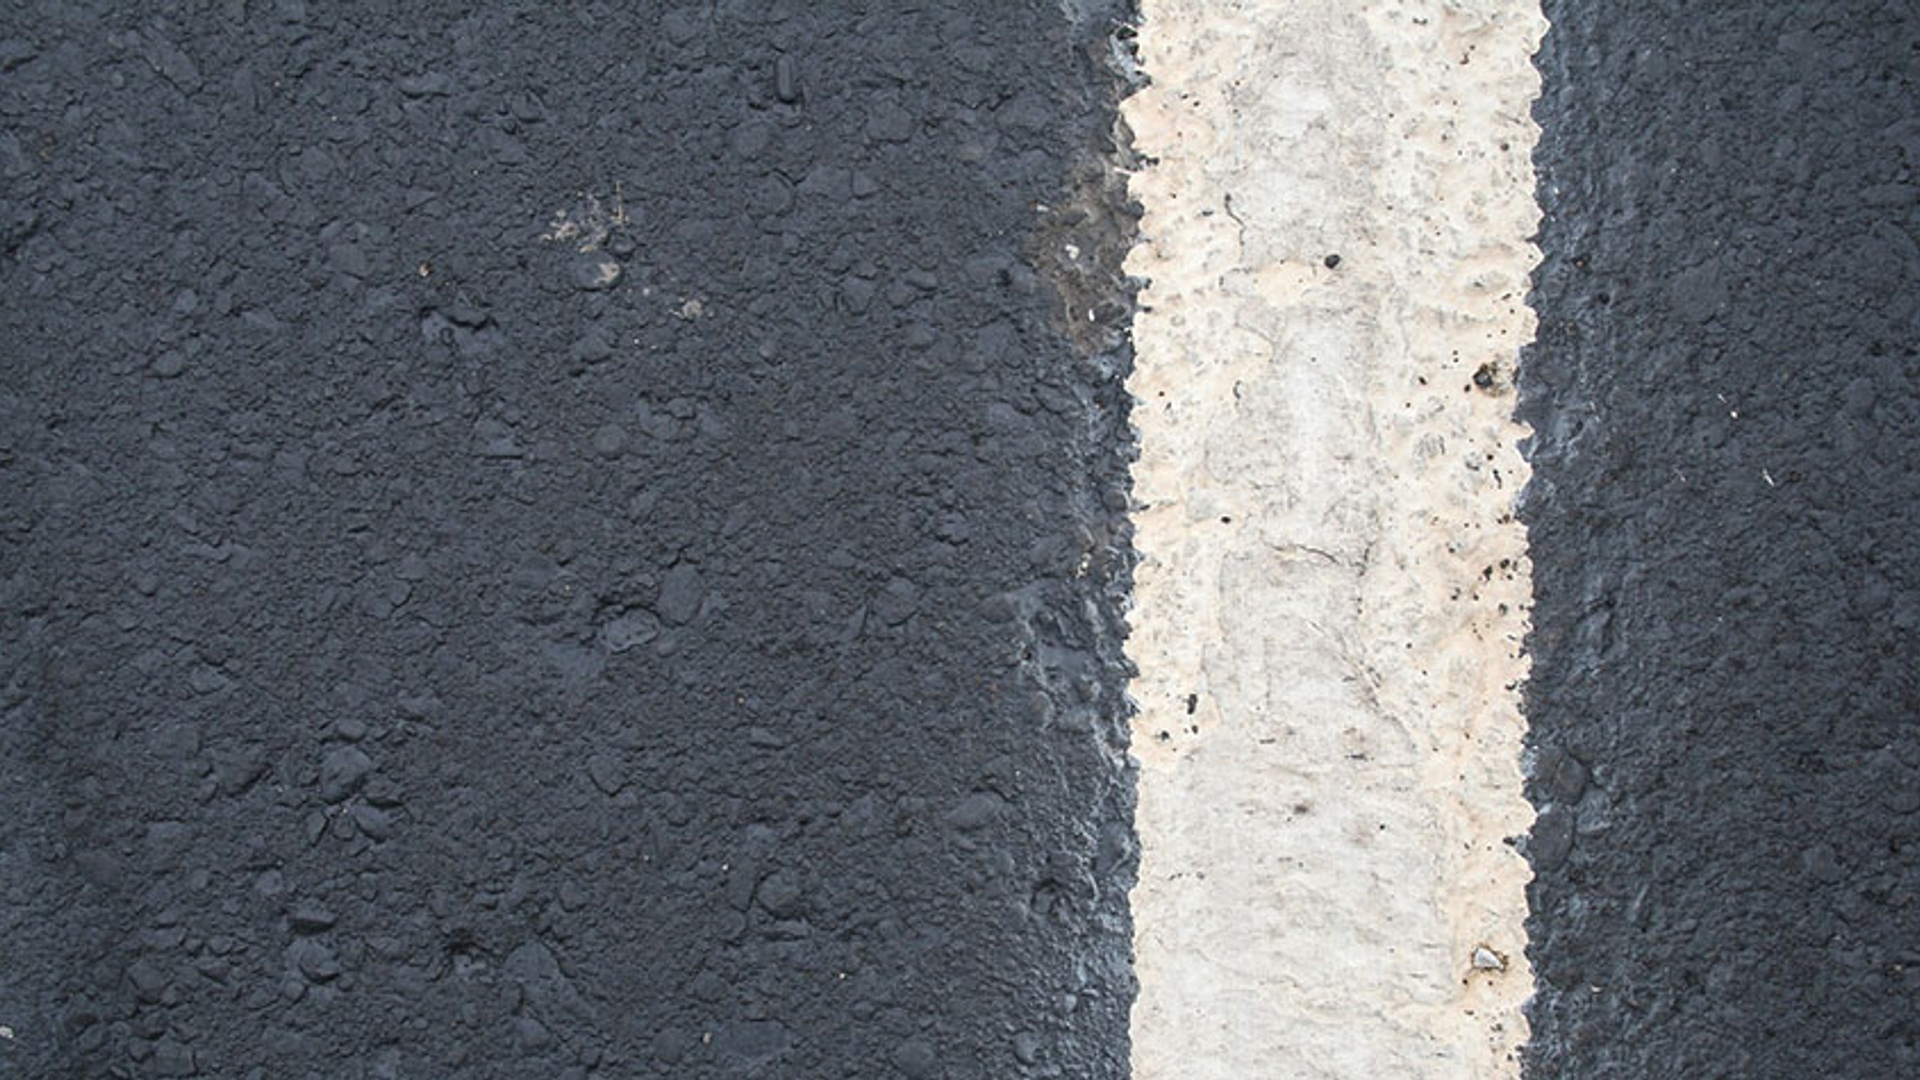 asfalt